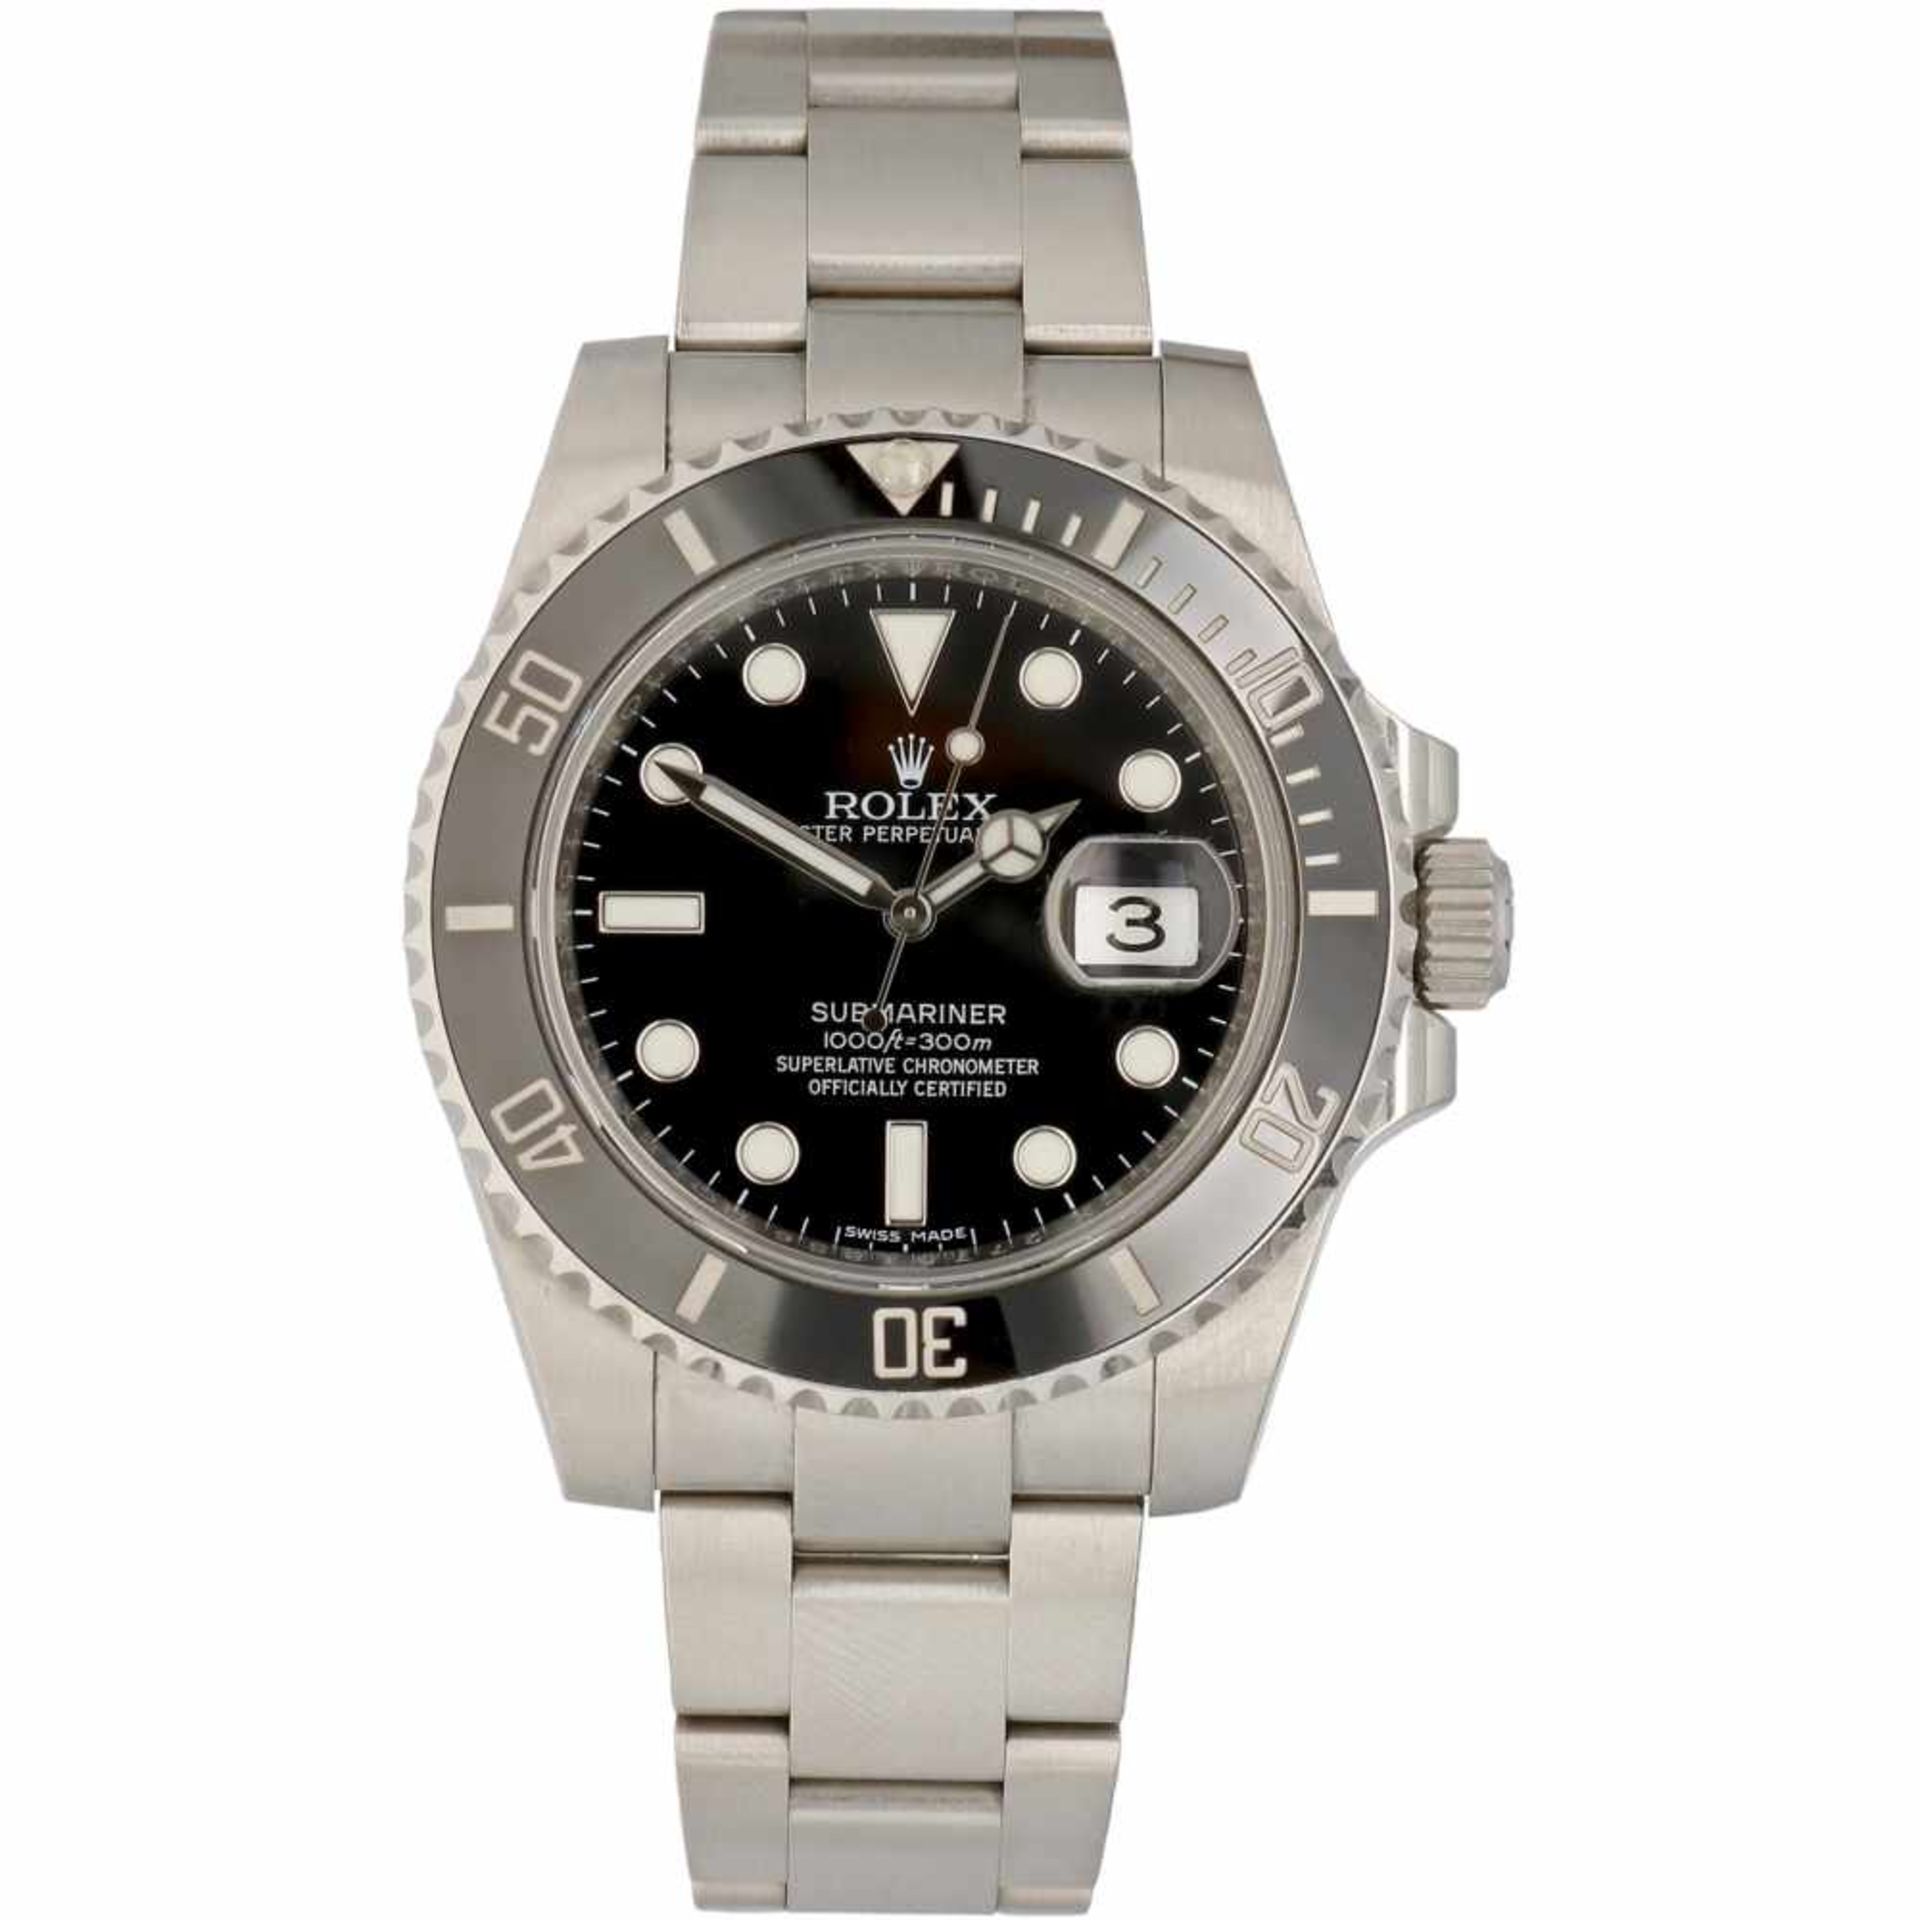 Rolex Submariner 116610 - Men's watch - Automatic - Ca. 2011.